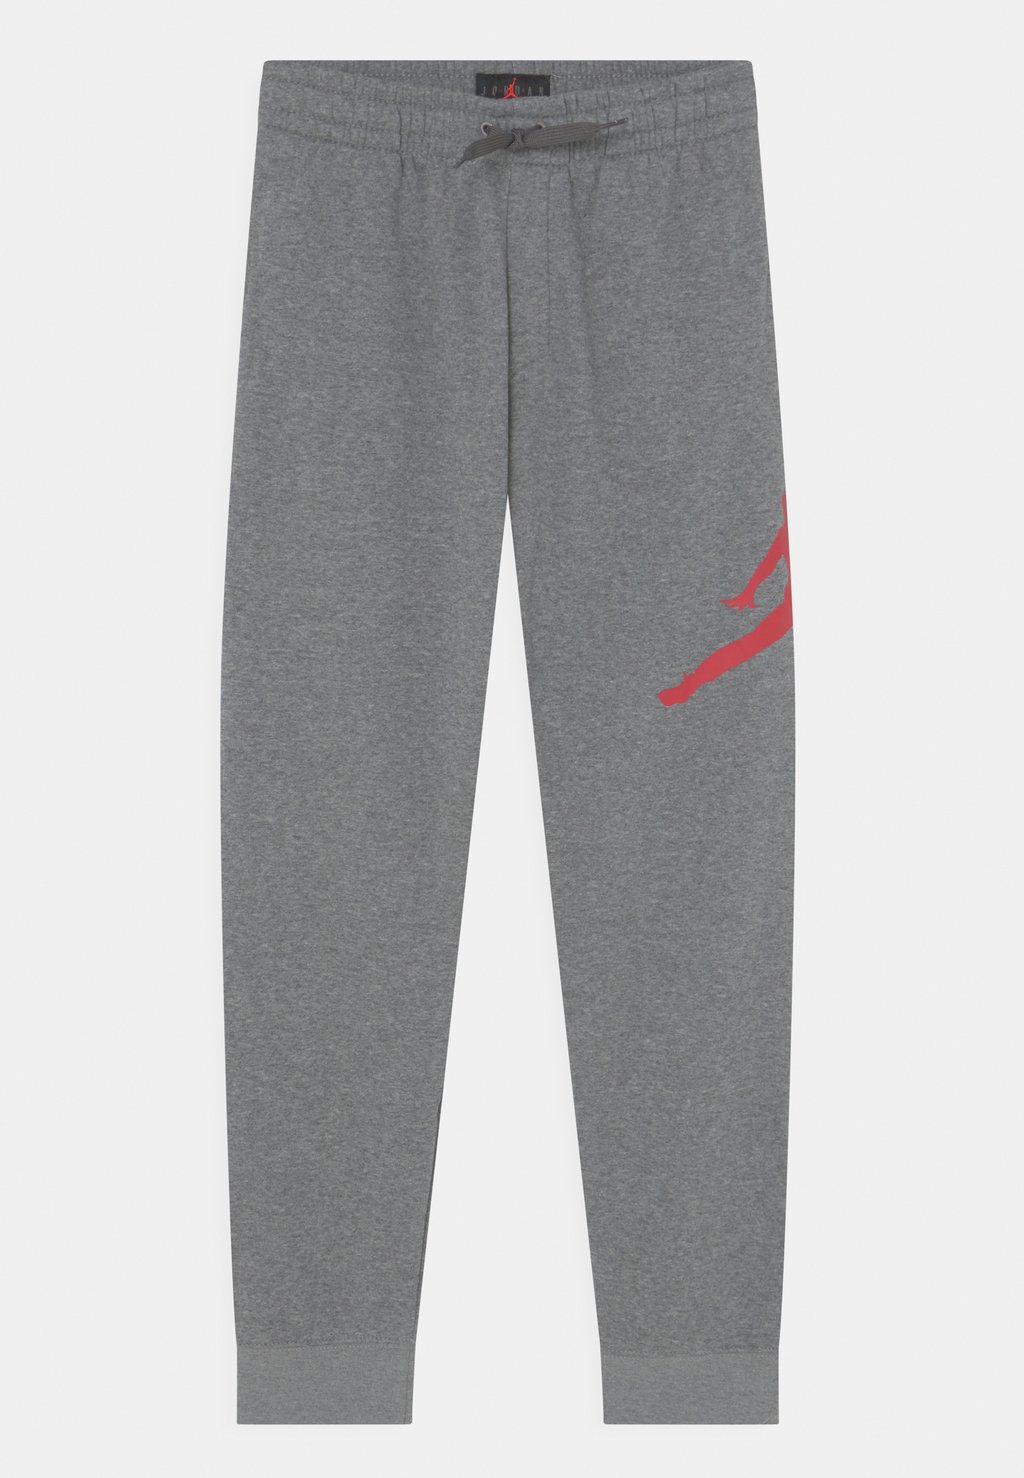 Спортивные штаны JUMPMAN LOGO PANT Jordan, серый